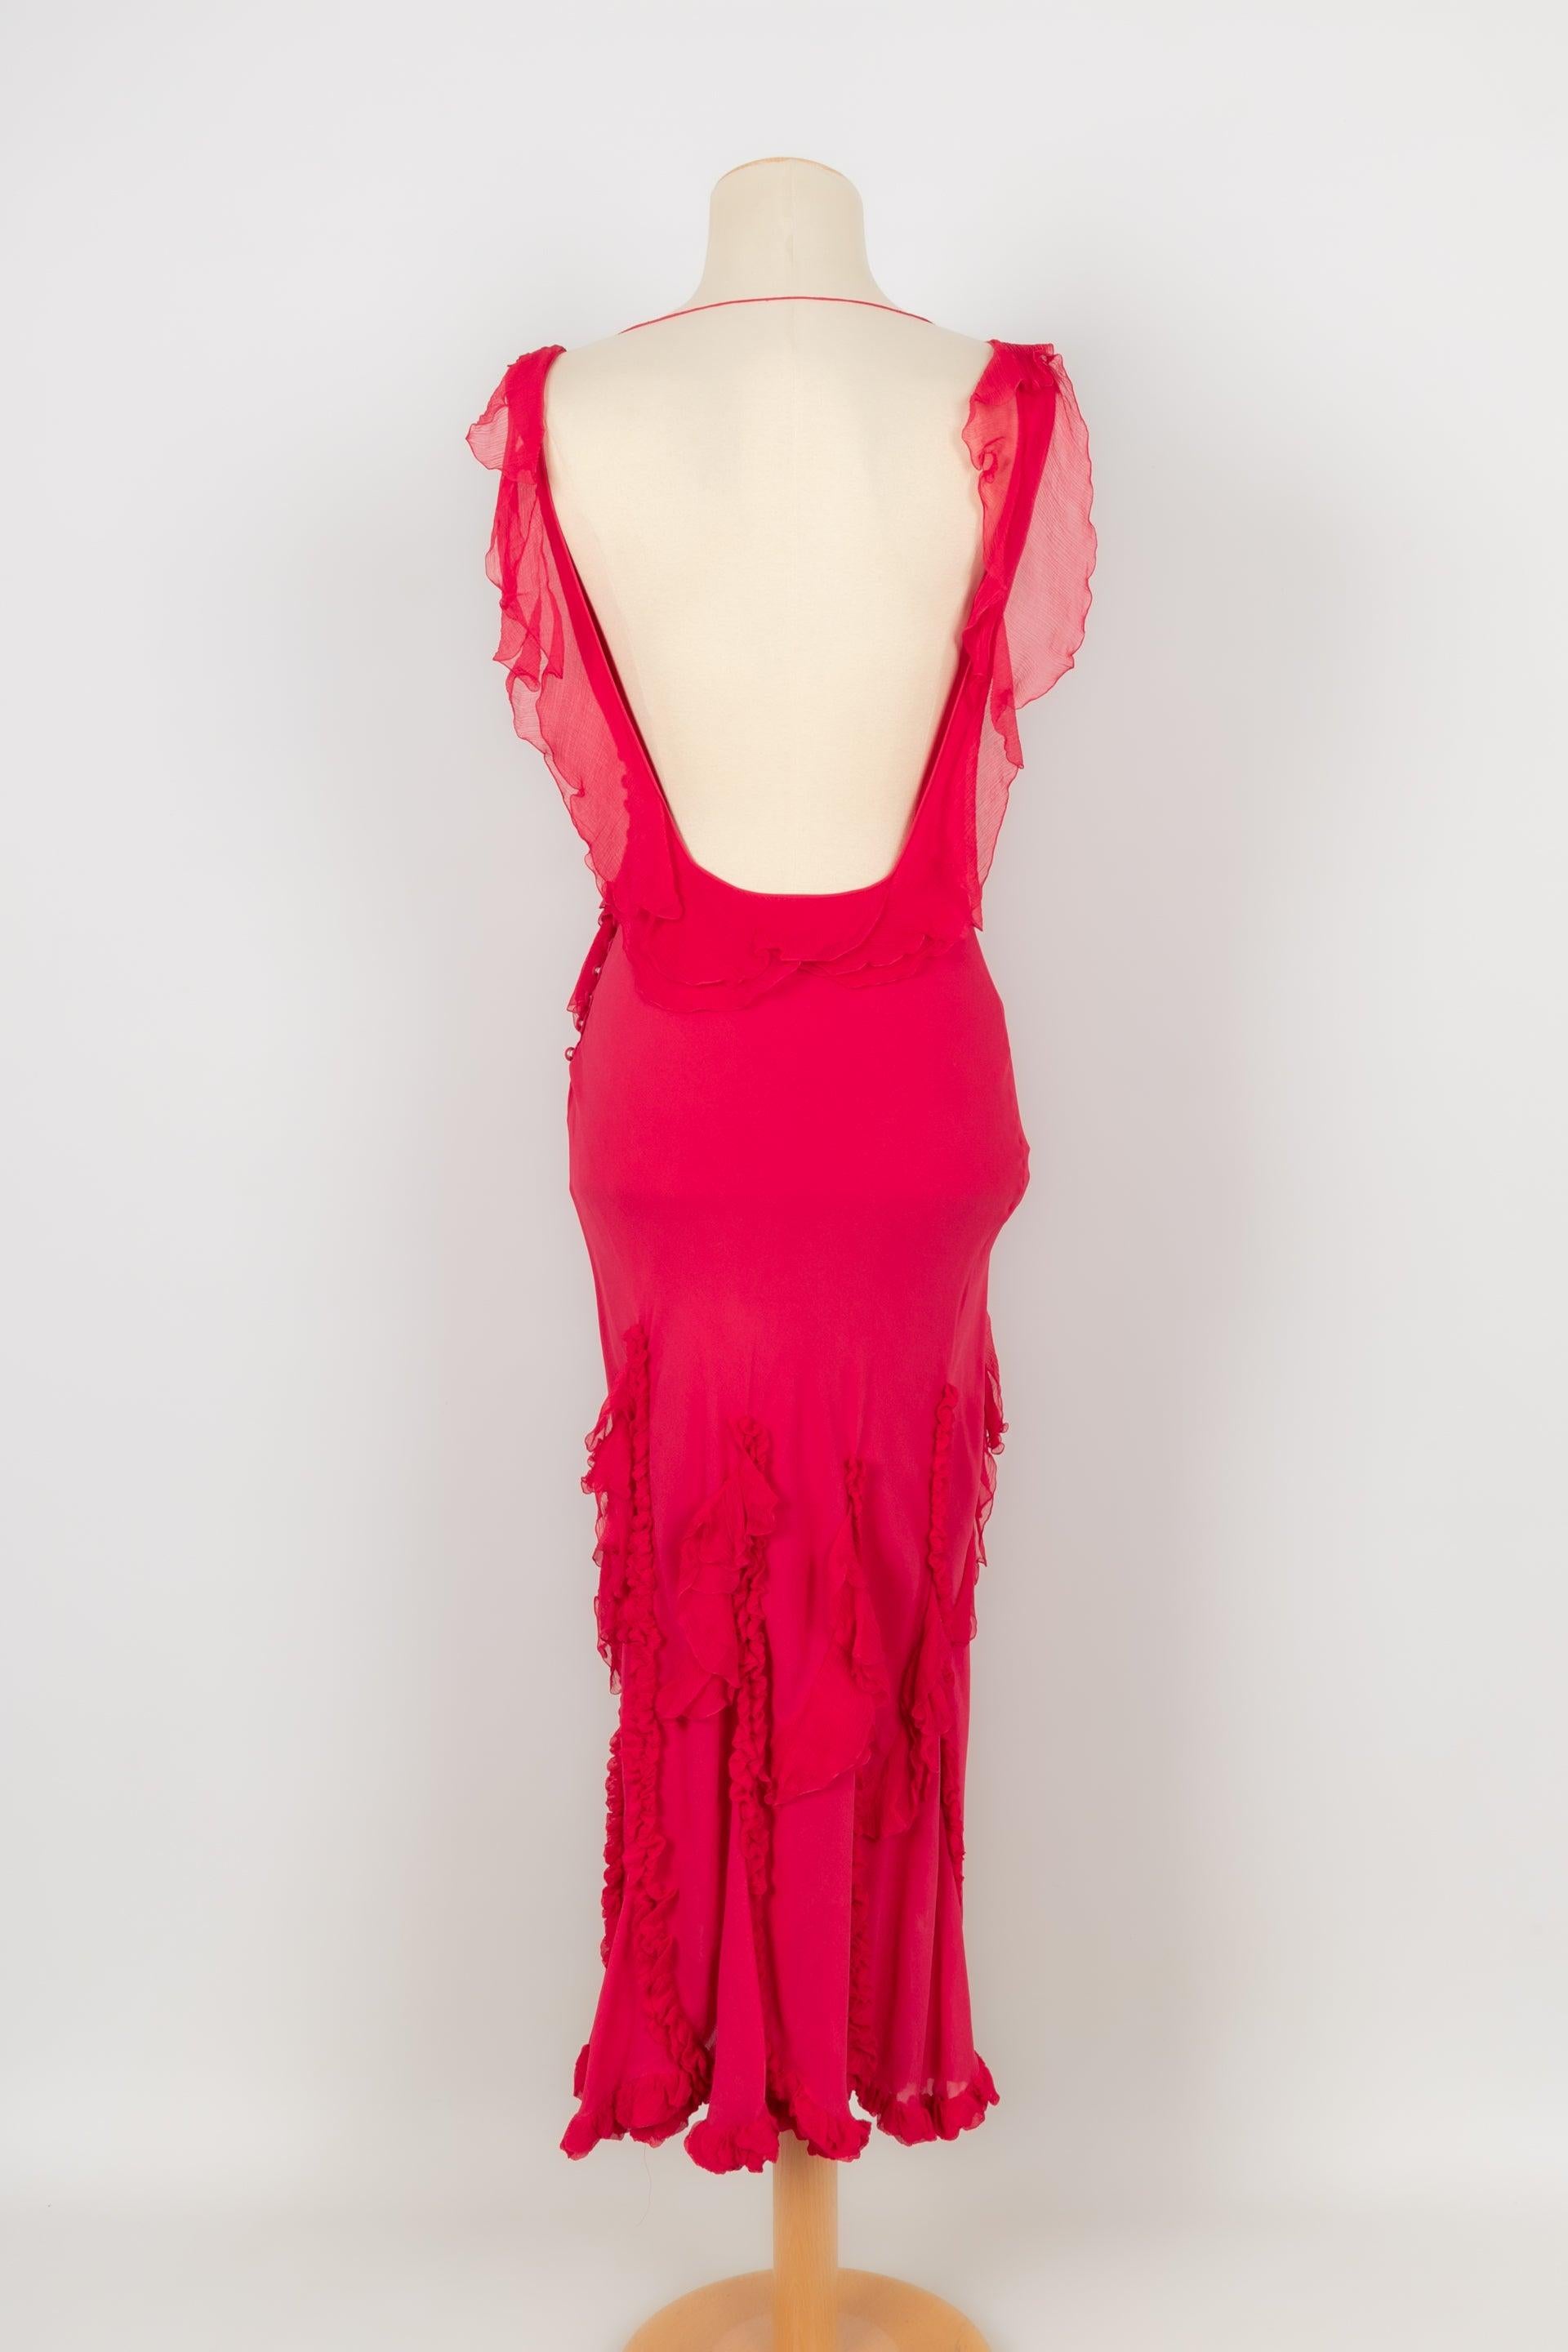 Women's Galliano Silk Muslin and Silk Long Dress in Pink Tones